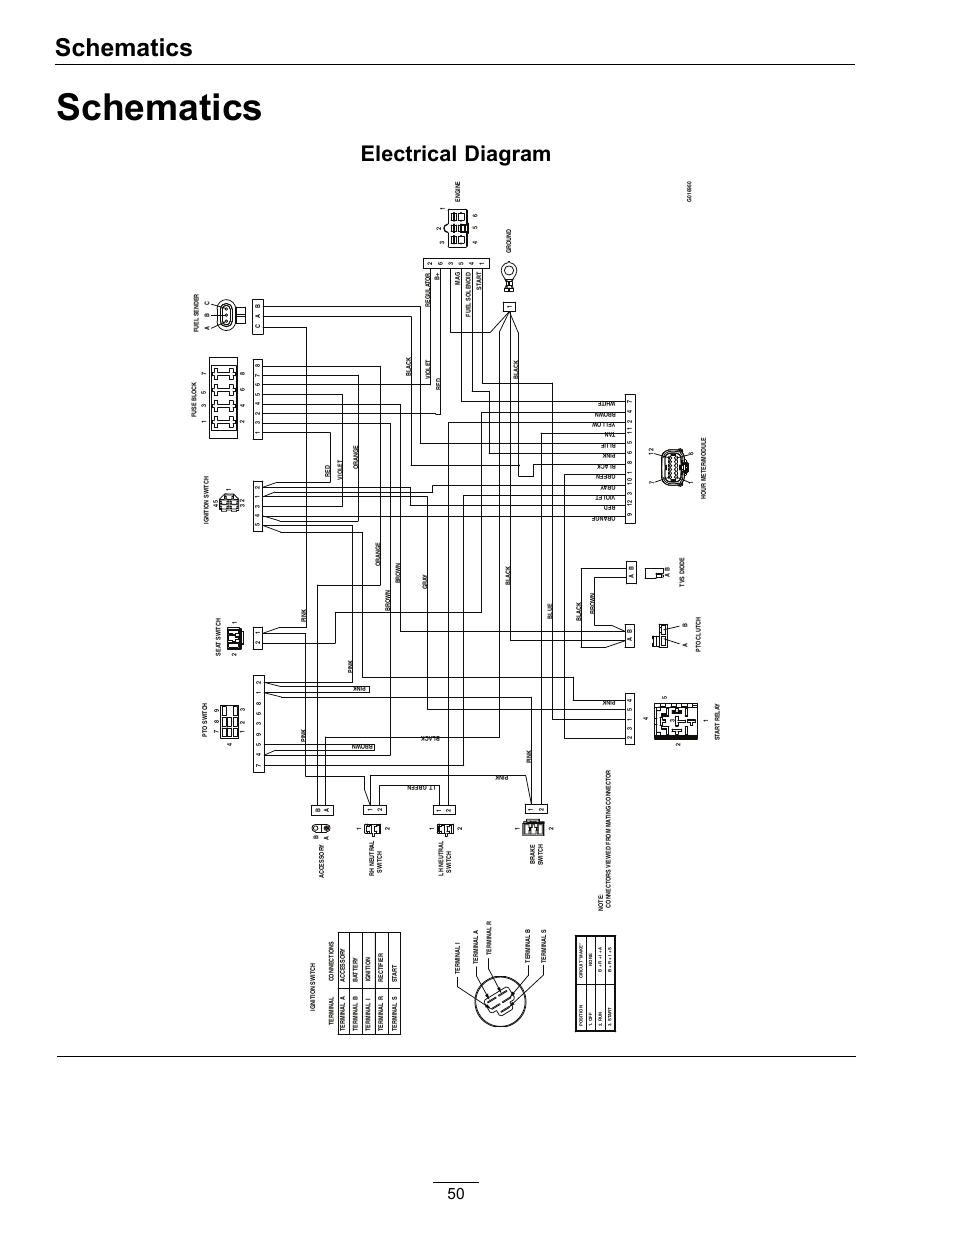 1971 honda sl70 wiring diagram